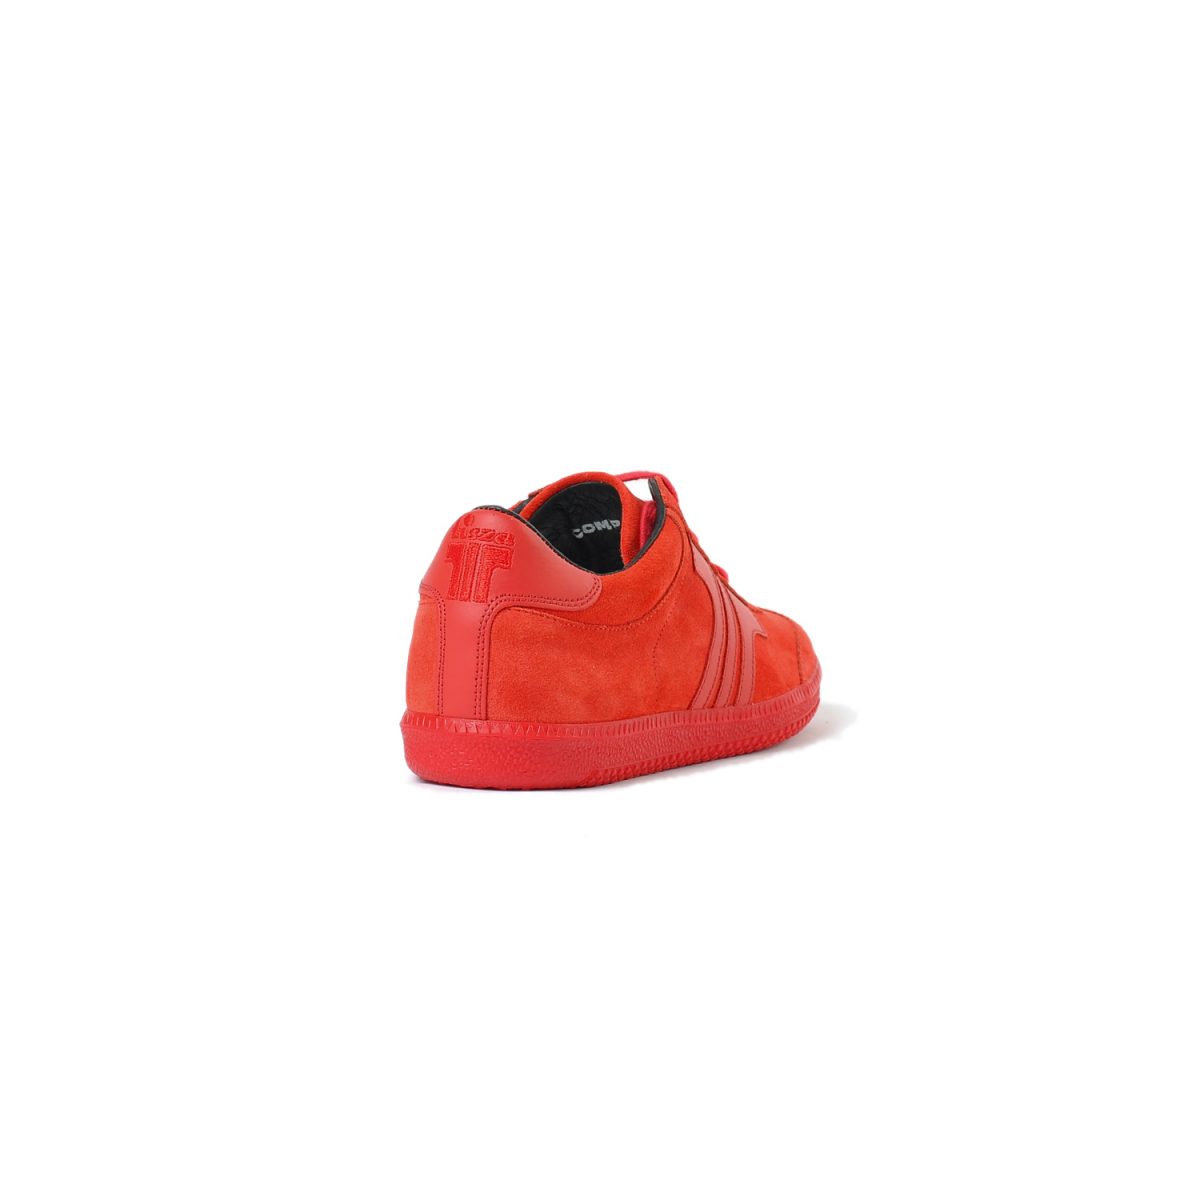 Tisza cipő - Compakt - Piros